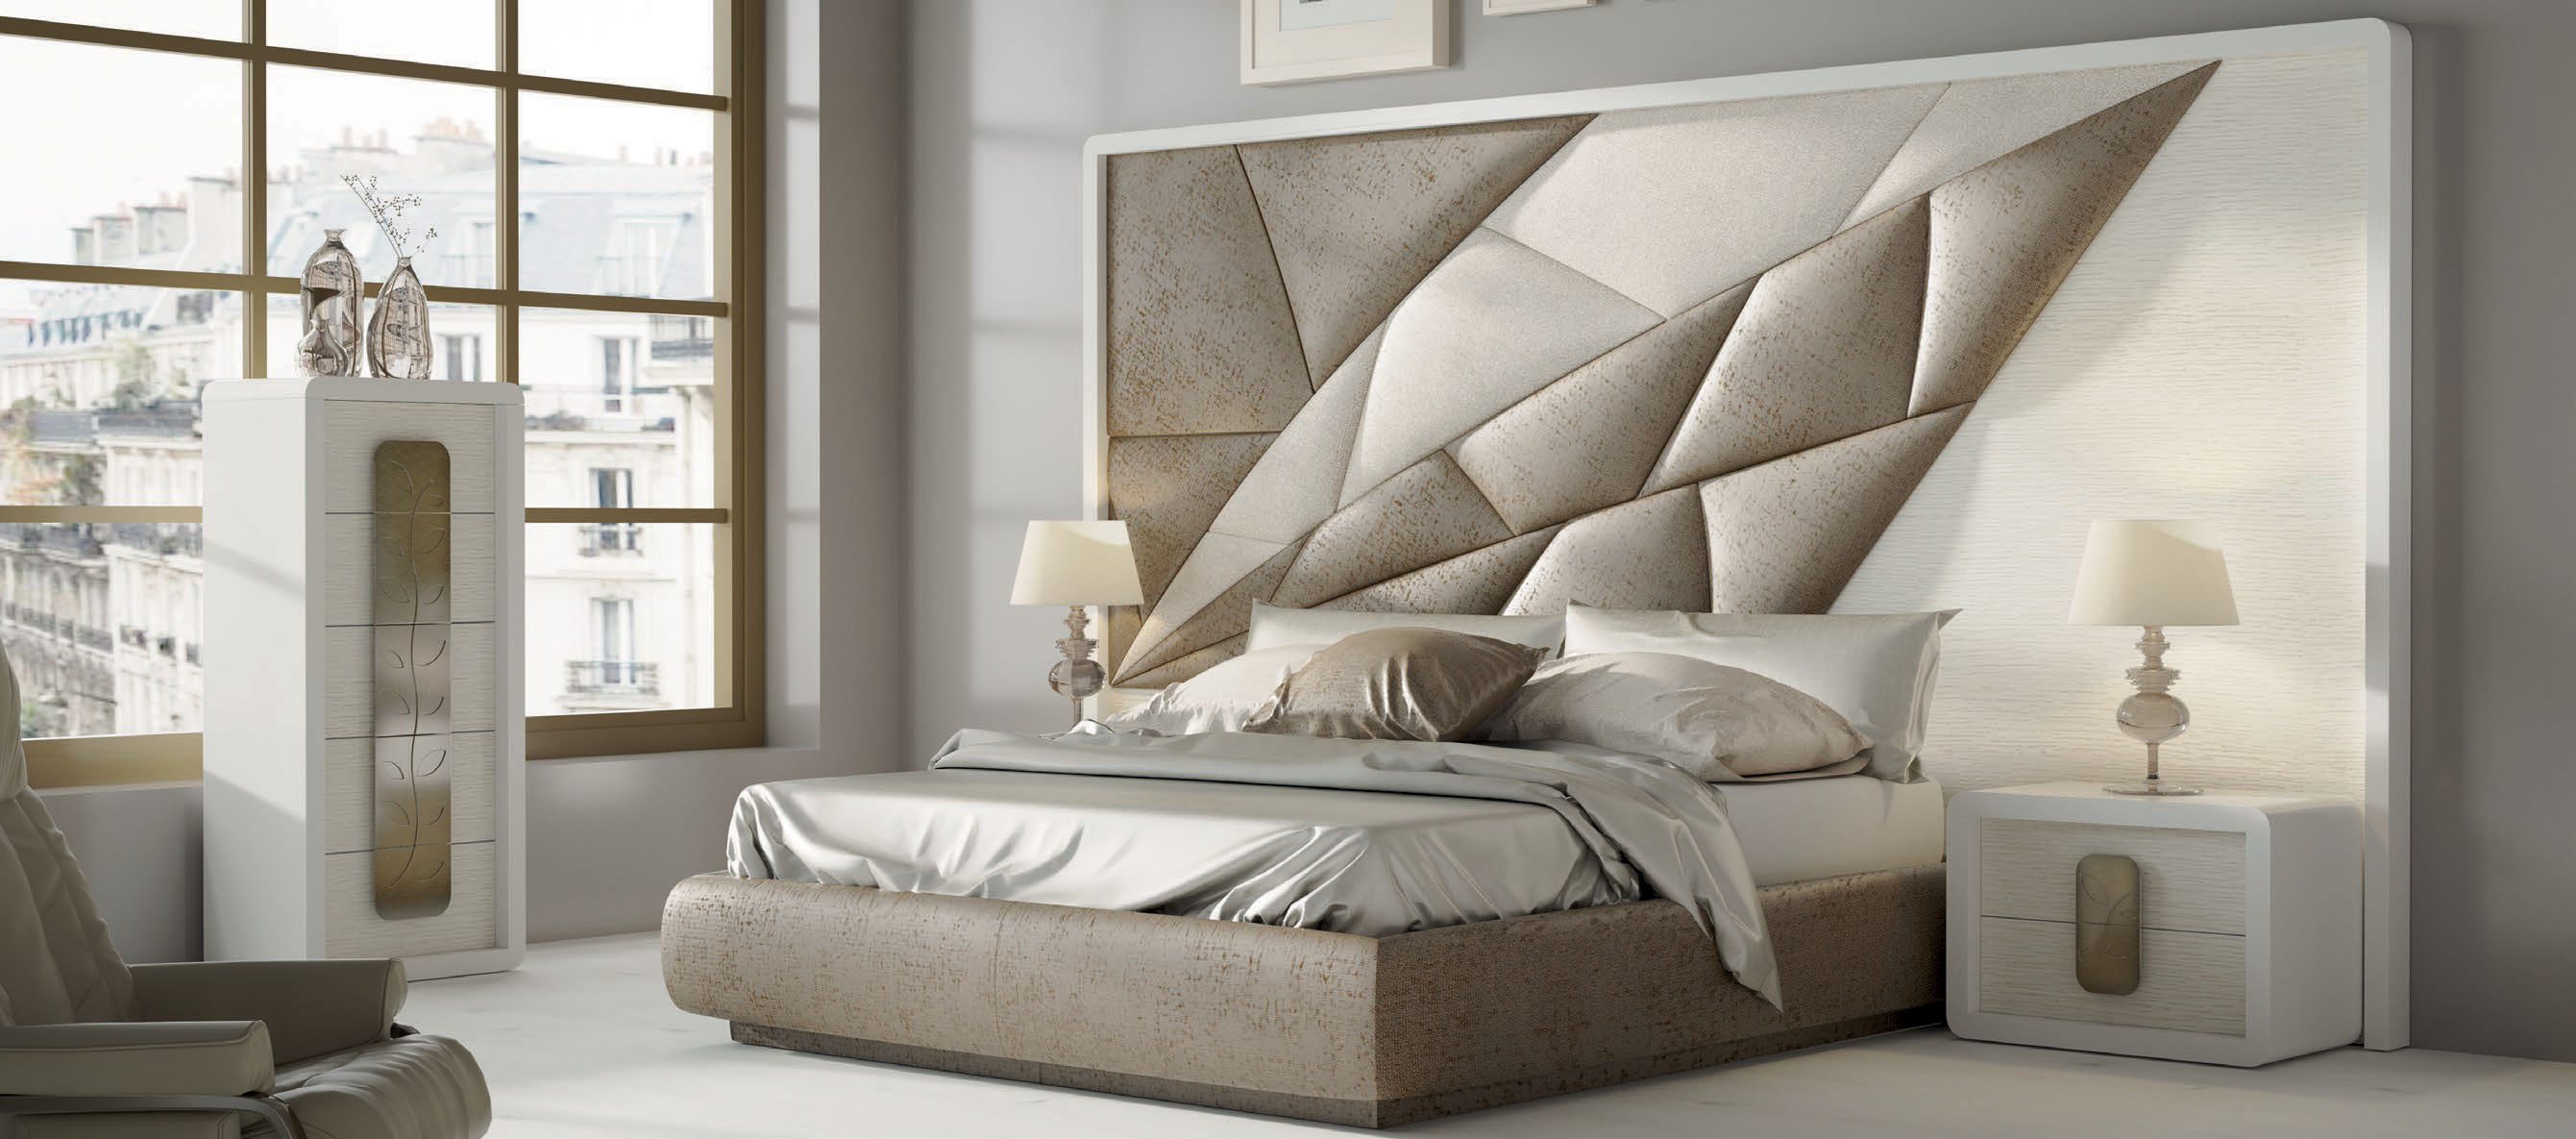 Brands Franco Furniture Bedrooms vol2, Spain DOR 166